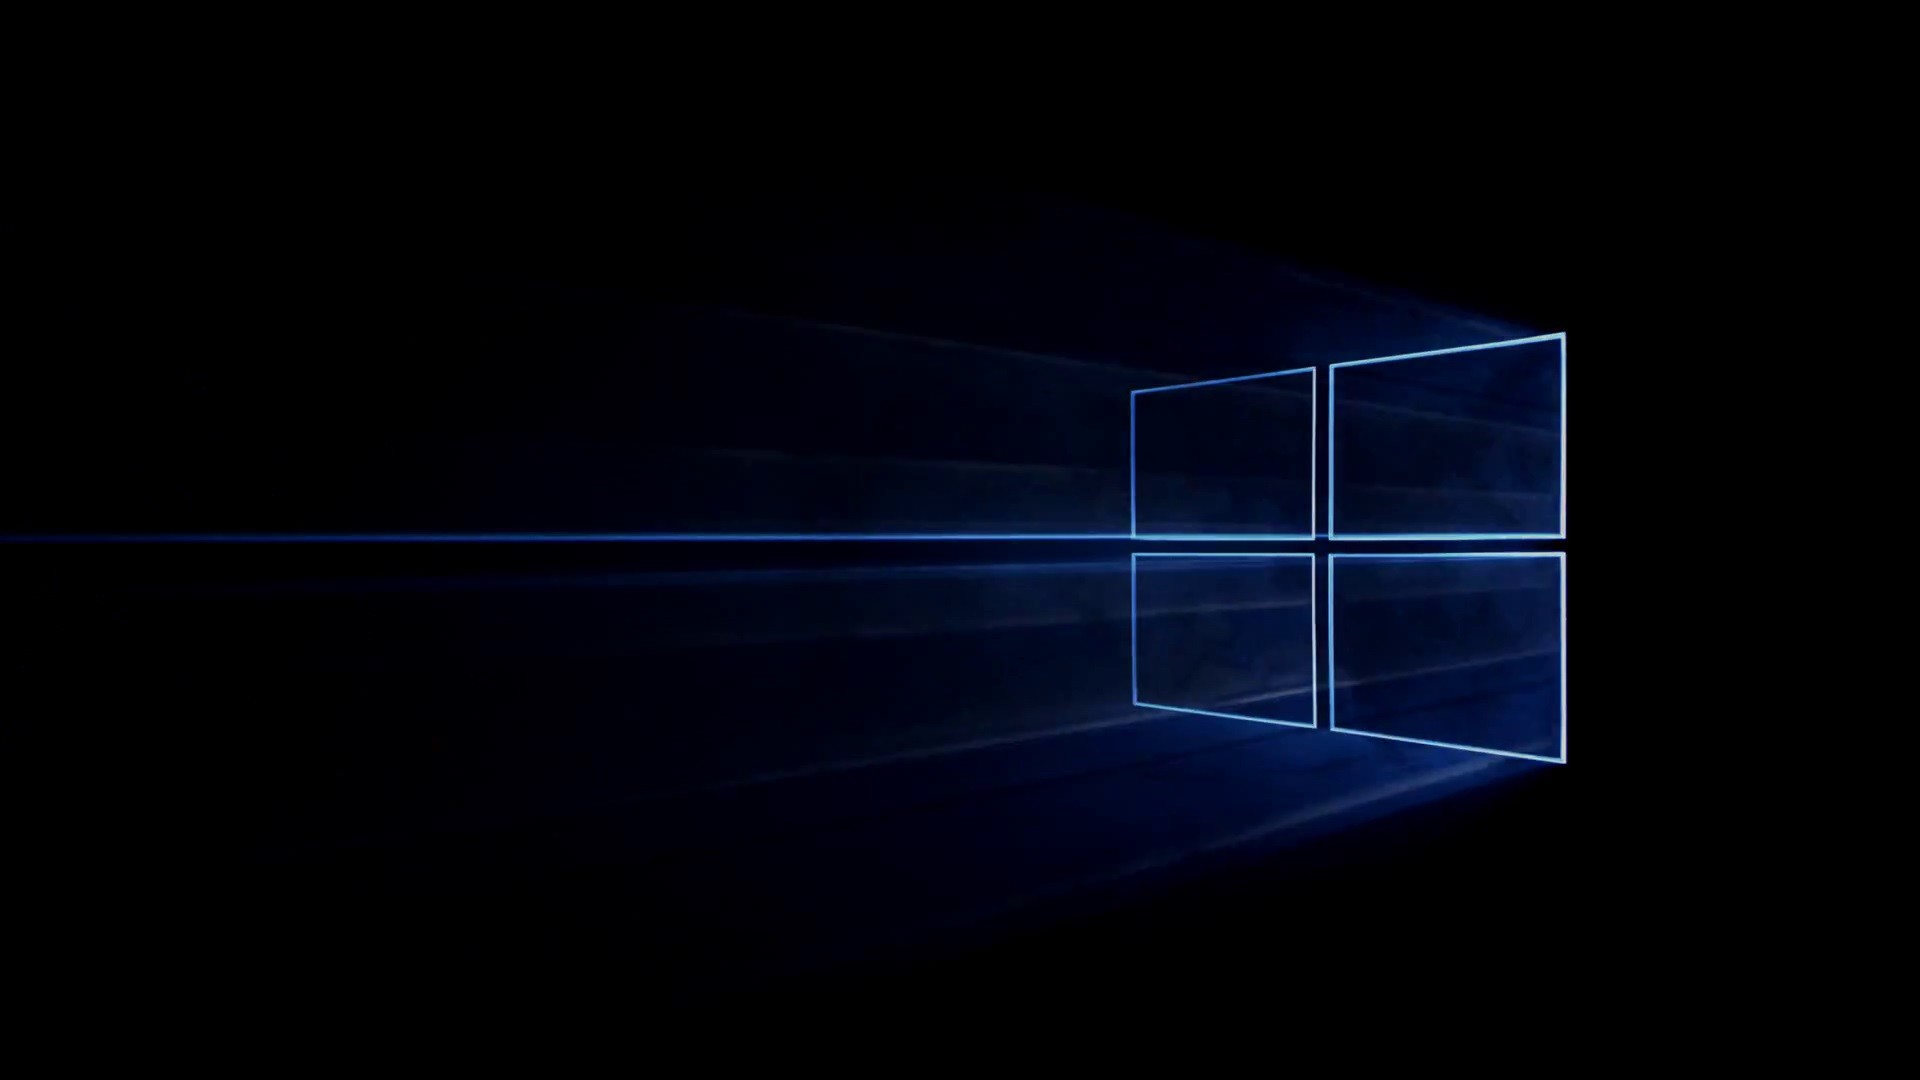 New Windows 10 Wallpapers Leak in Build 10154 Screenshots 1920x1080